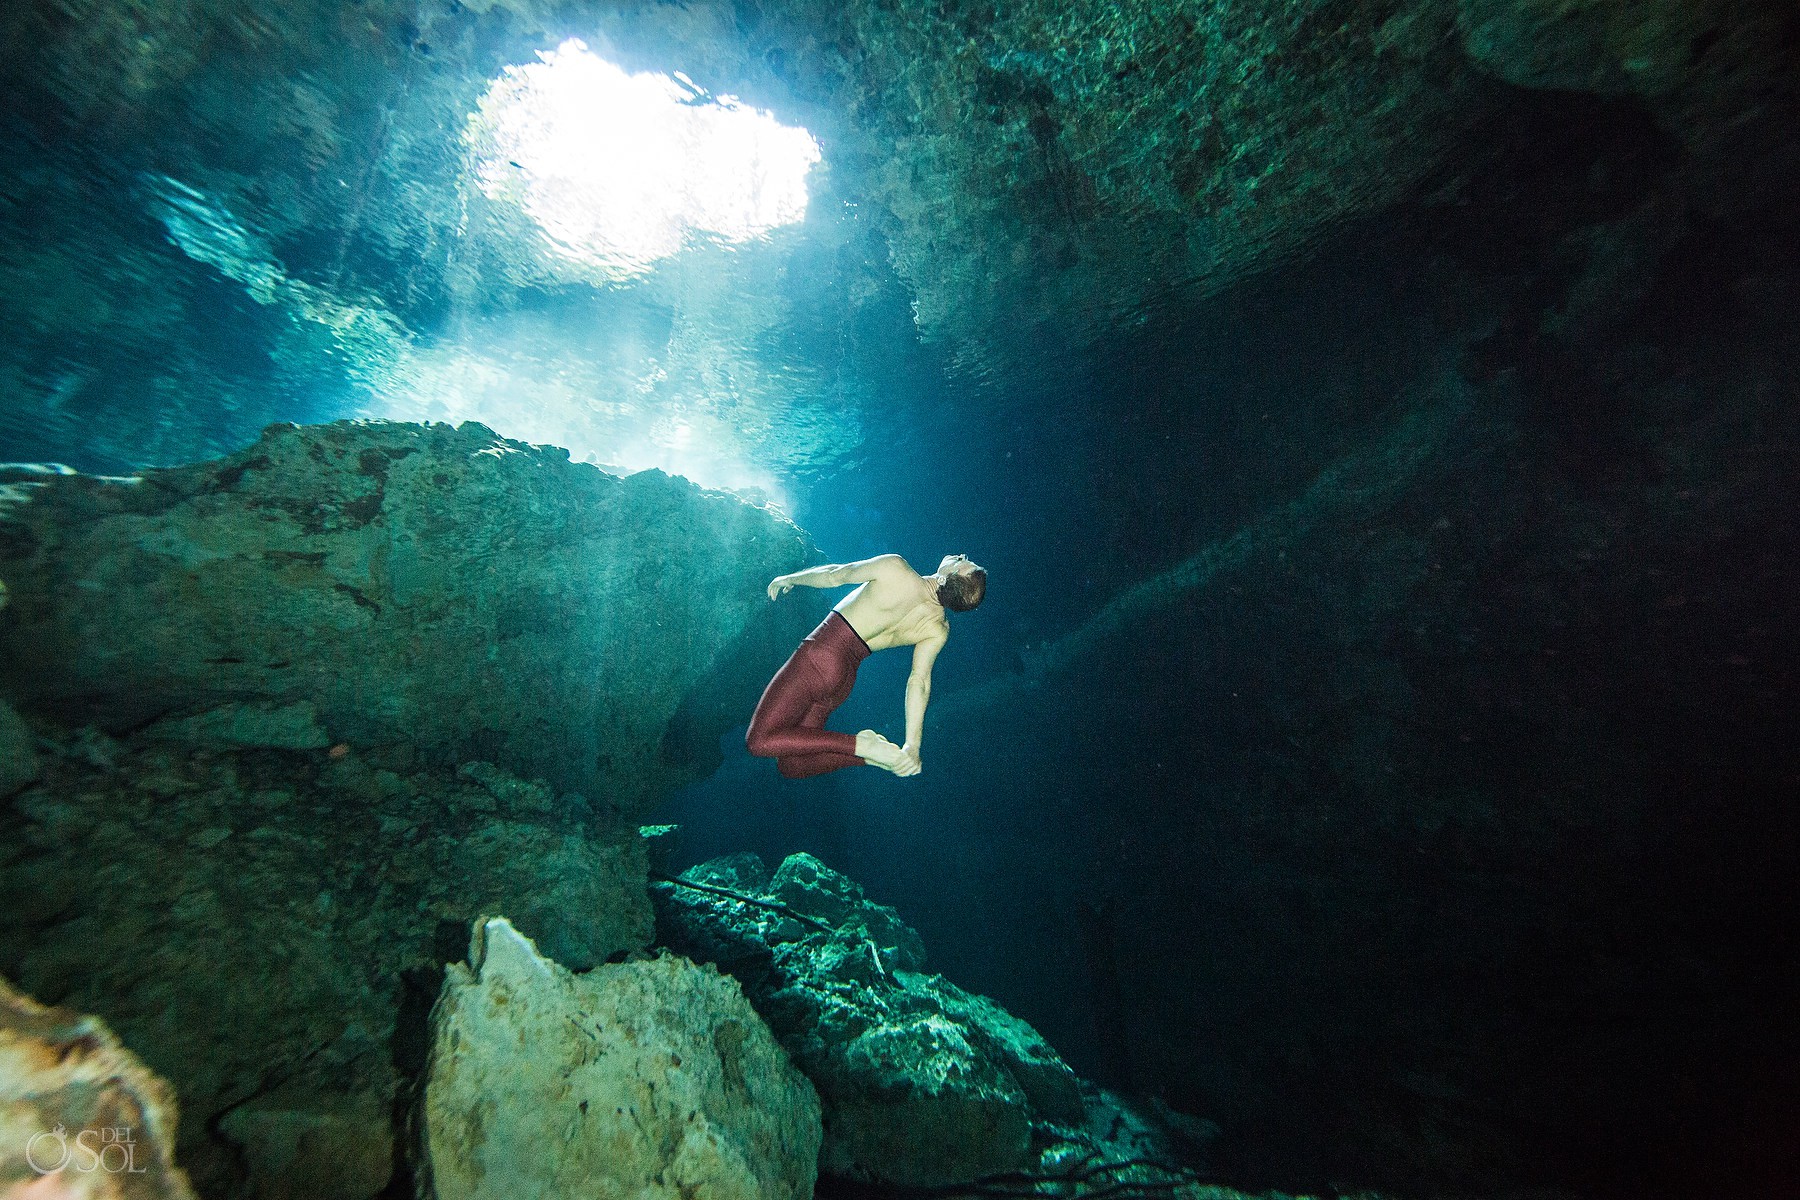 Sirena the underwater ballerina